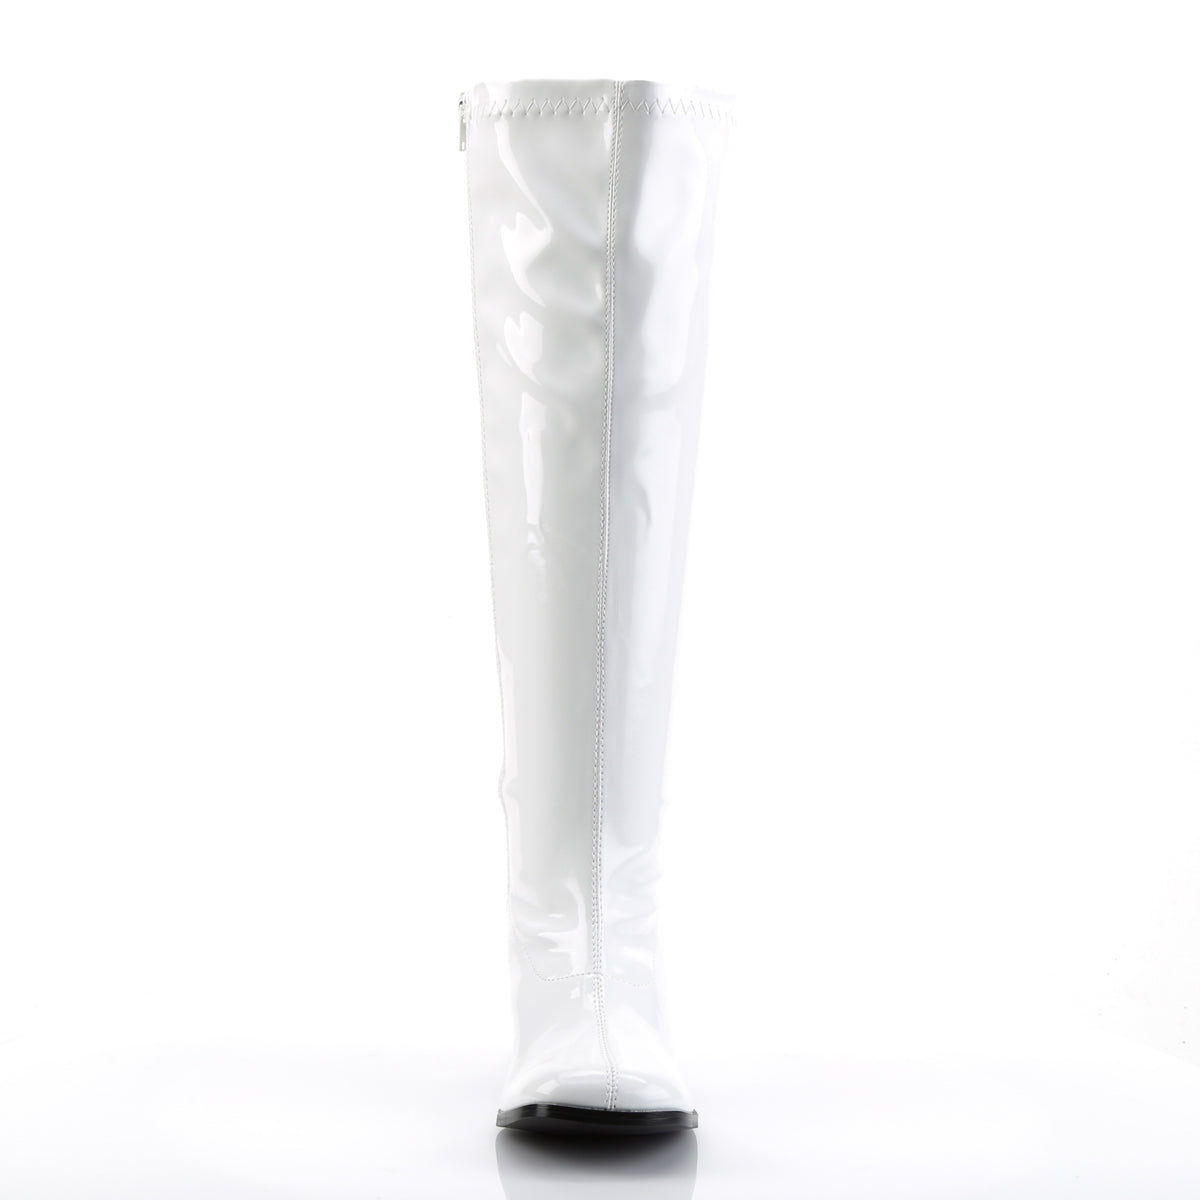 GOGO-300WC Funtasma Fantasy White Stretch Patent Plus Sizes & Wide Width/Shaft [Retro Knee High Boots]